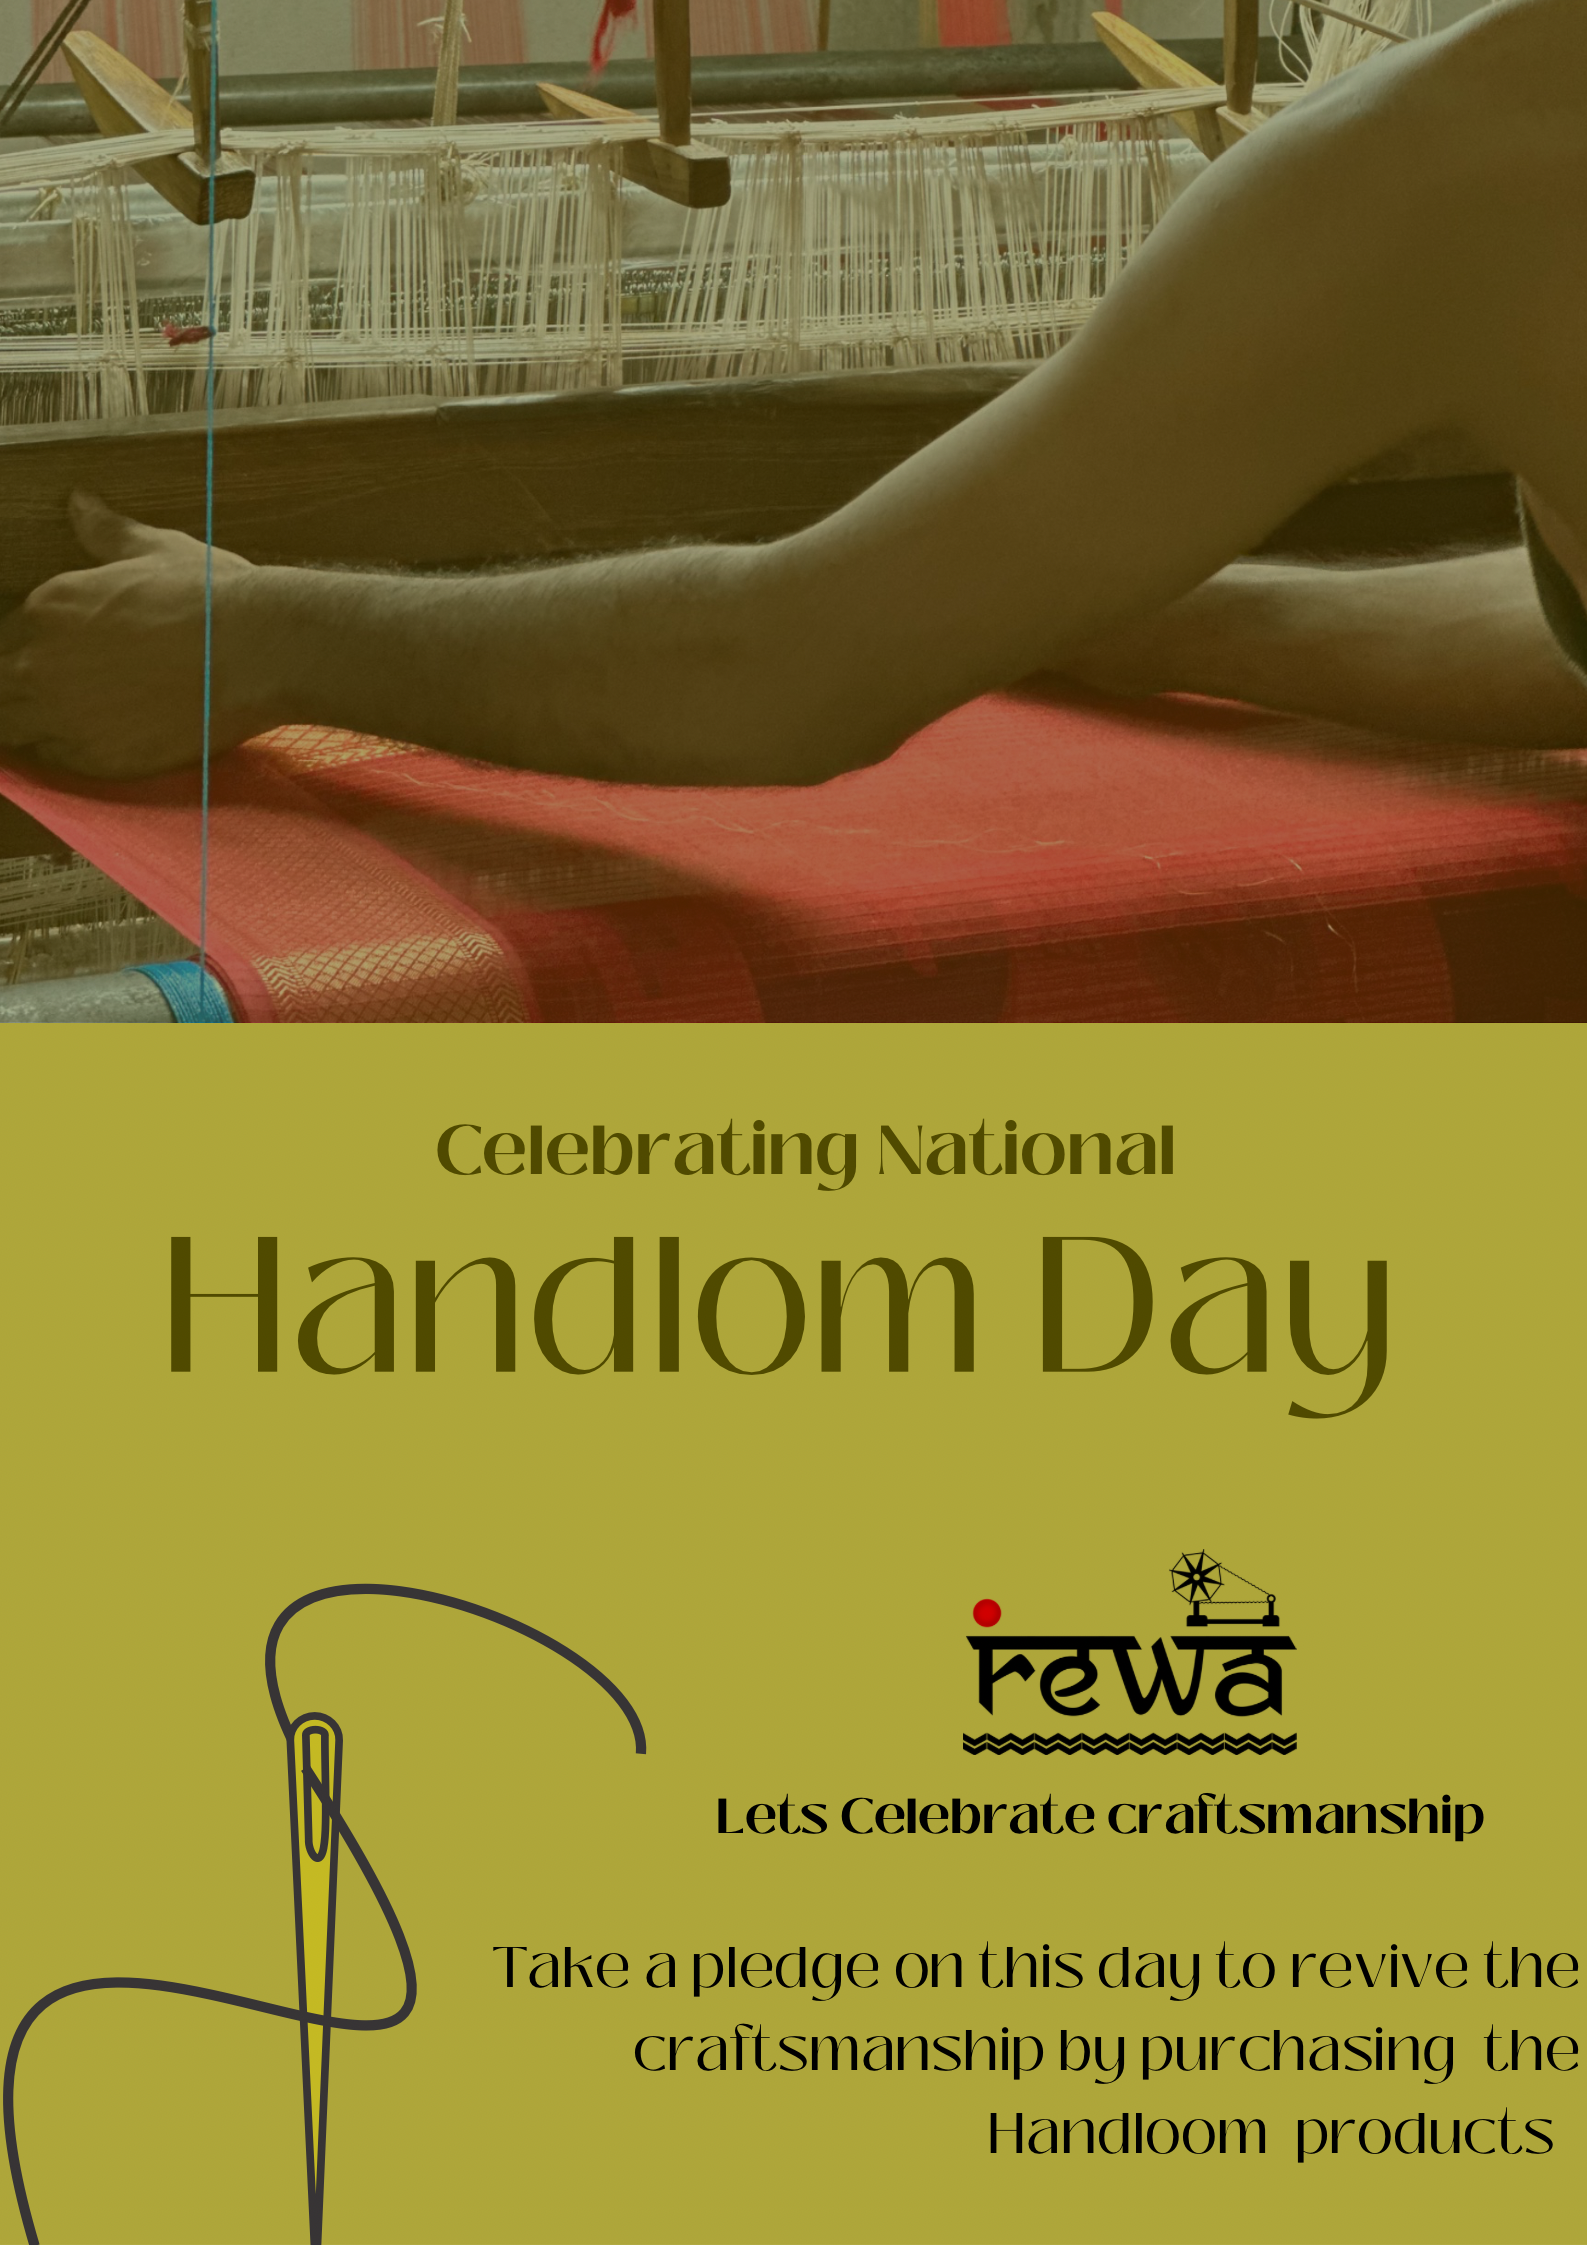 Rewa Celebrate craftsmanship on National Handloom Day